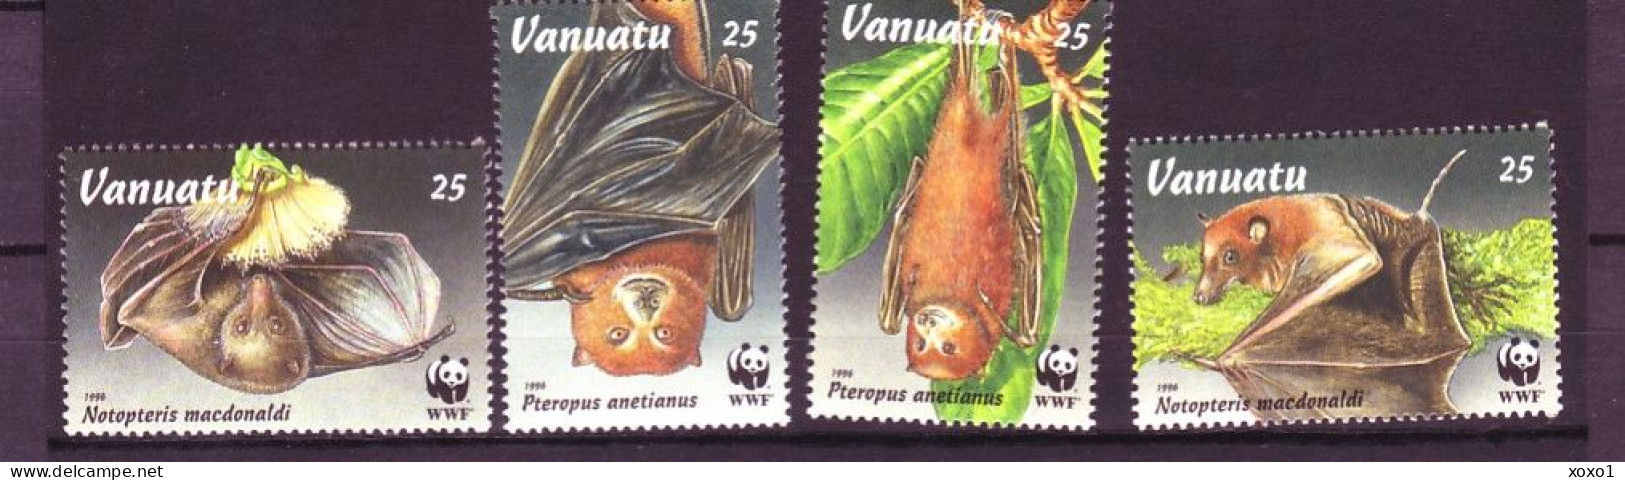 Vanuatu 1996 MiNr. 1004 - 1009 WWF Mammals Bats Insular Flying Fox, Fijian Blossom Bat  4v  MNH** 3.60 € - Unused Stamps